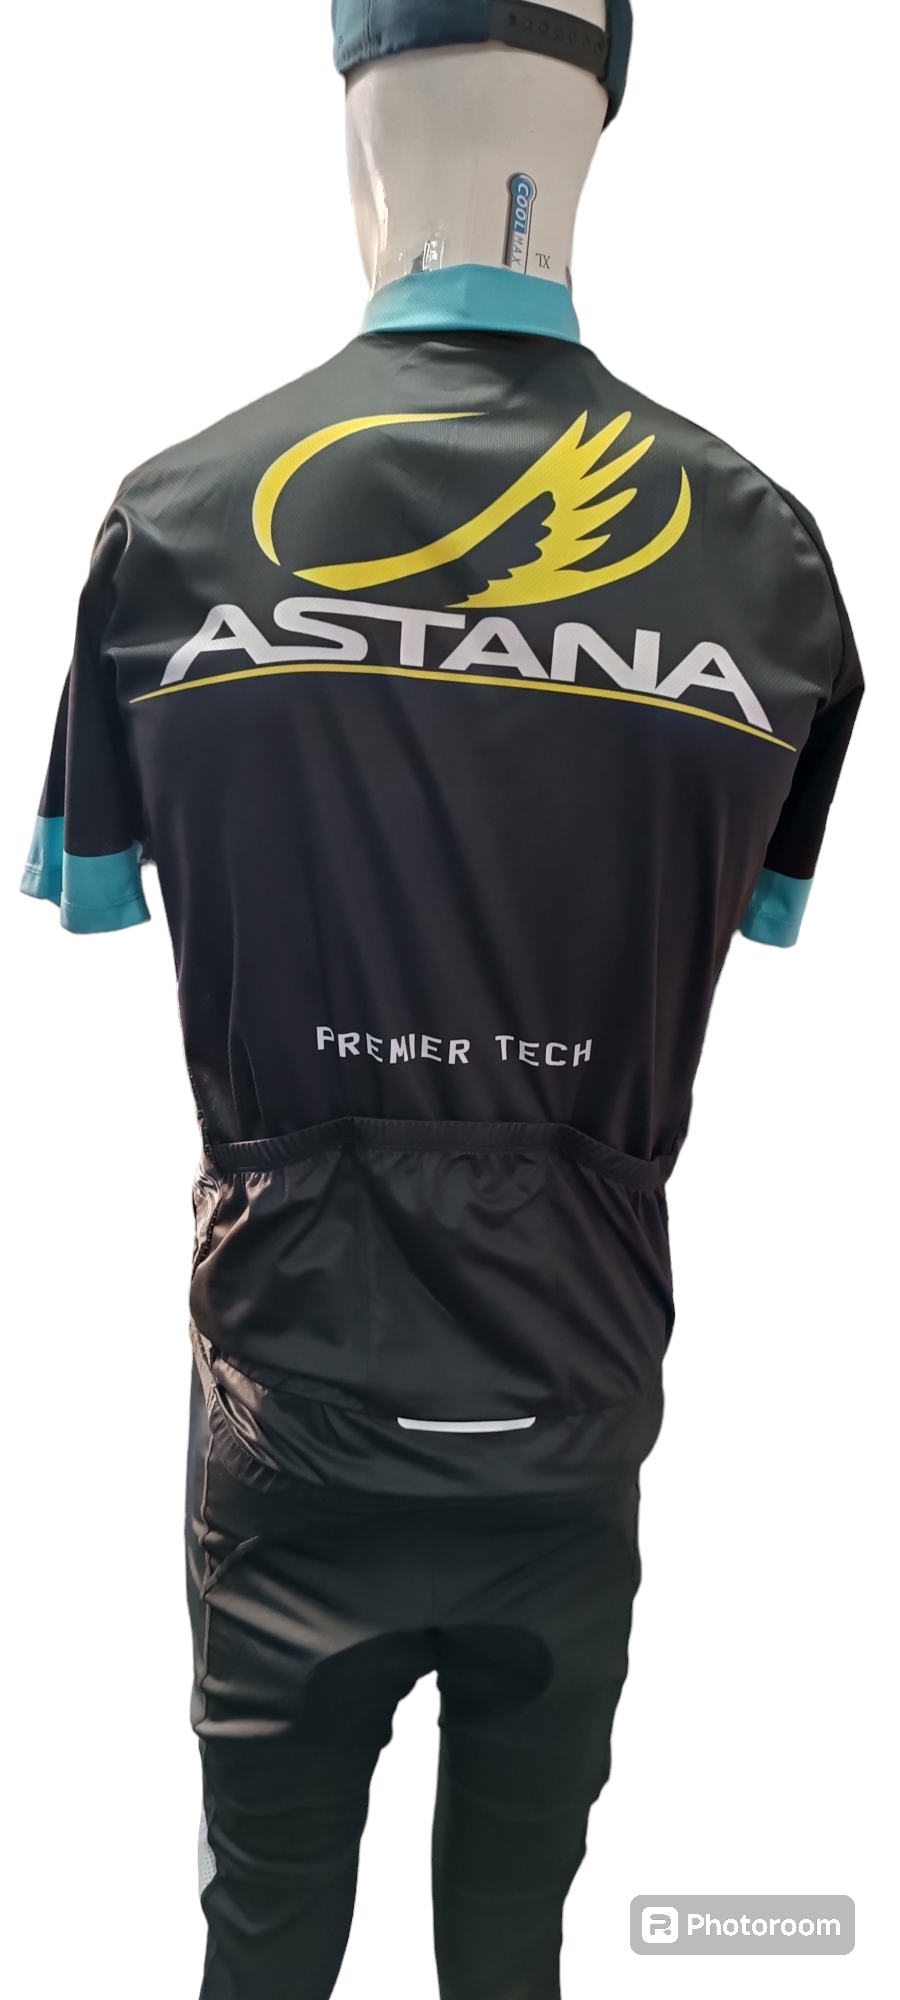 Camisa ciclismo Astana